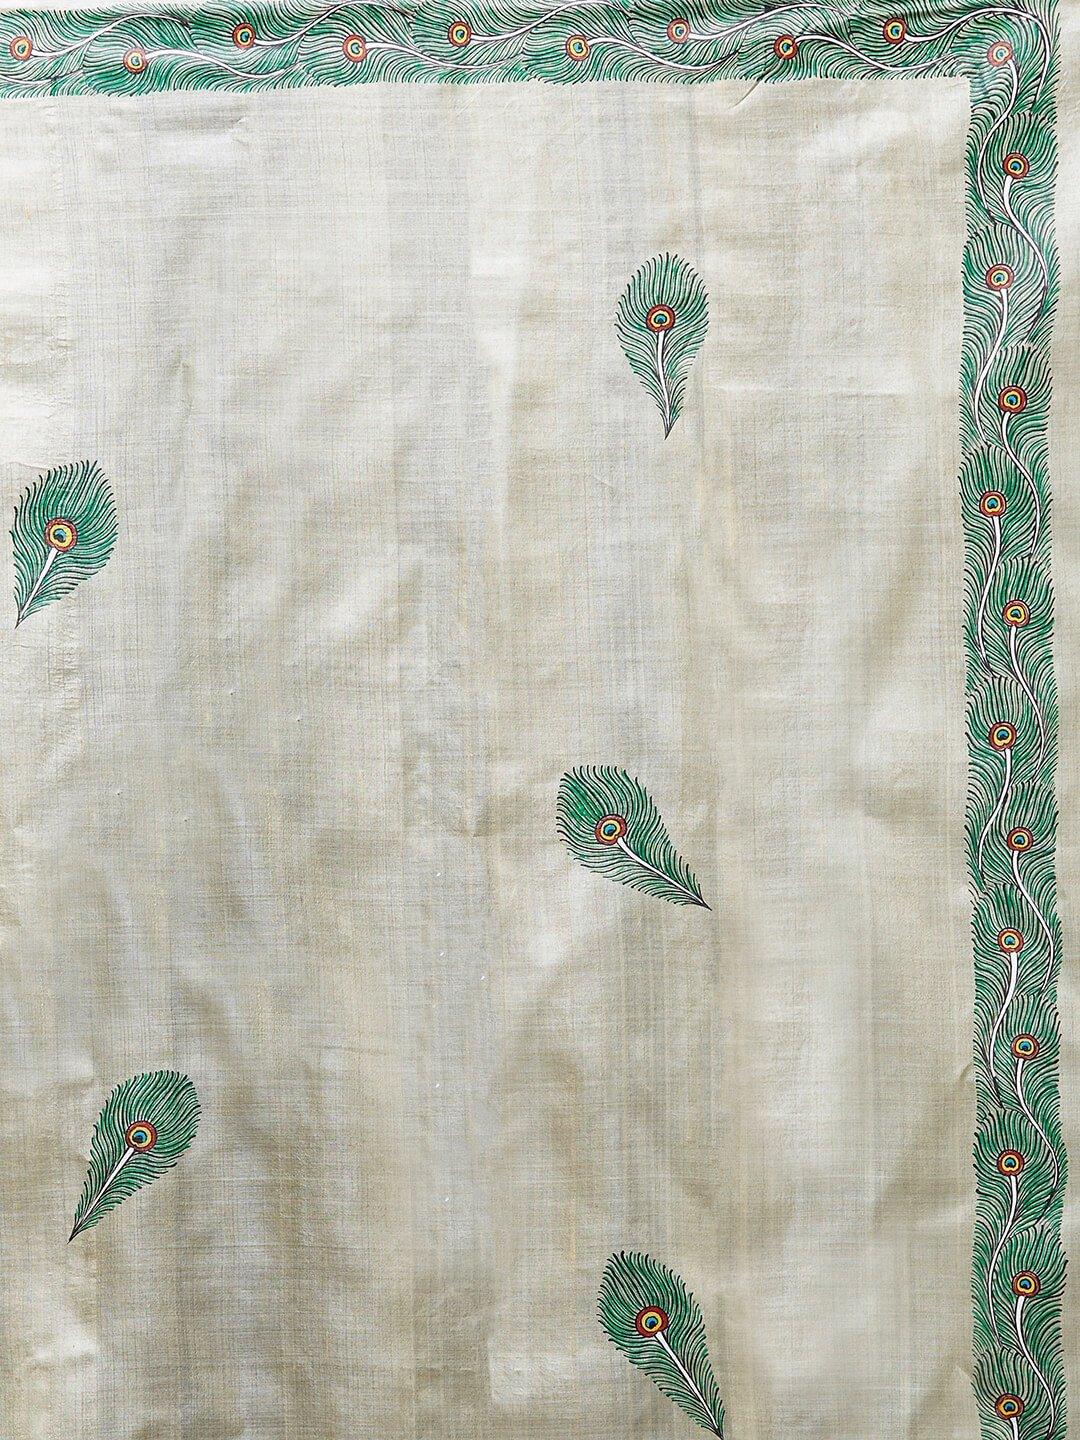 CraftsCollection.in -Beige Tussar Silk Saree with handpainted Pattachitra motifs